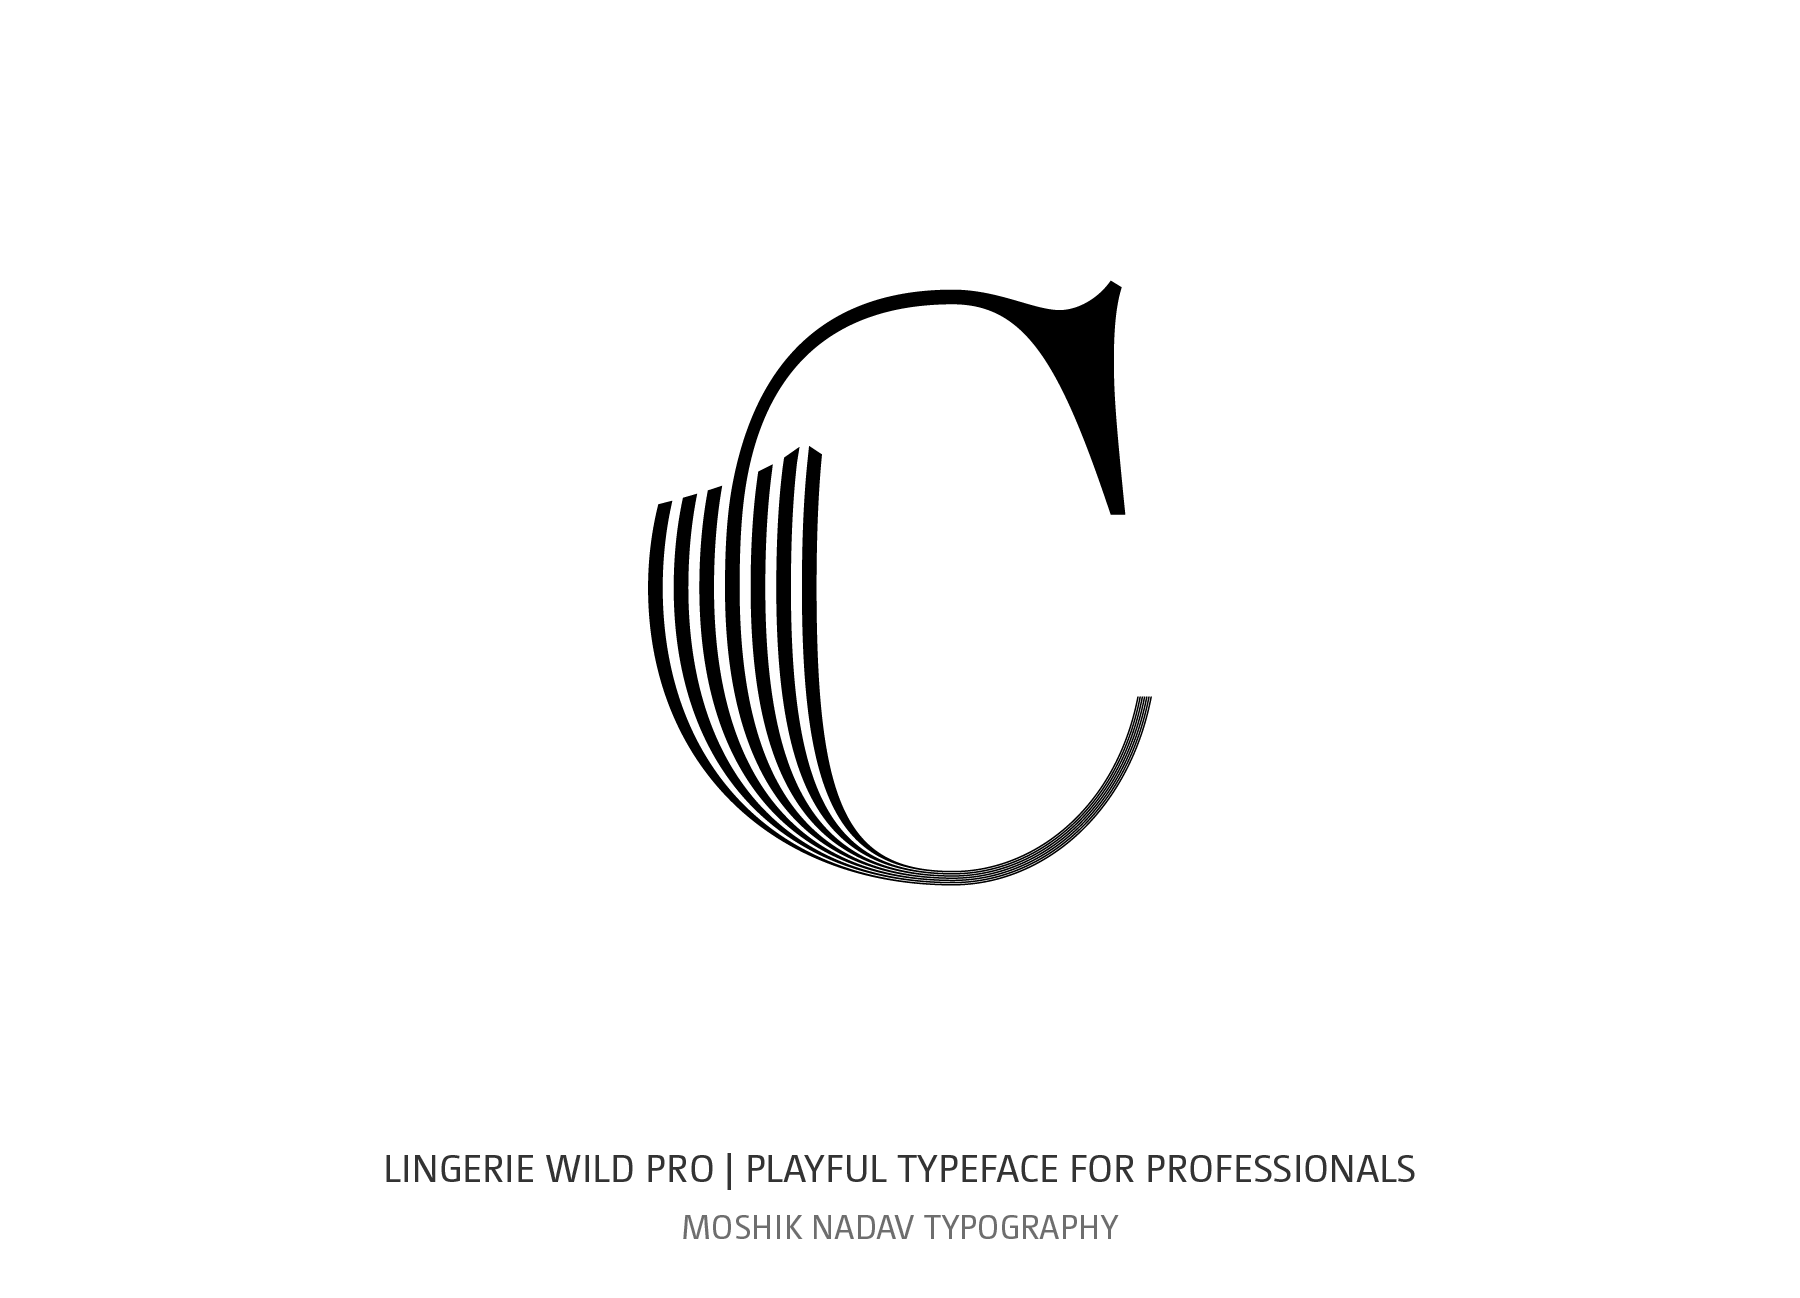 Lingerie Wild Pro Typeface designed for fashion magazines and luxury logos